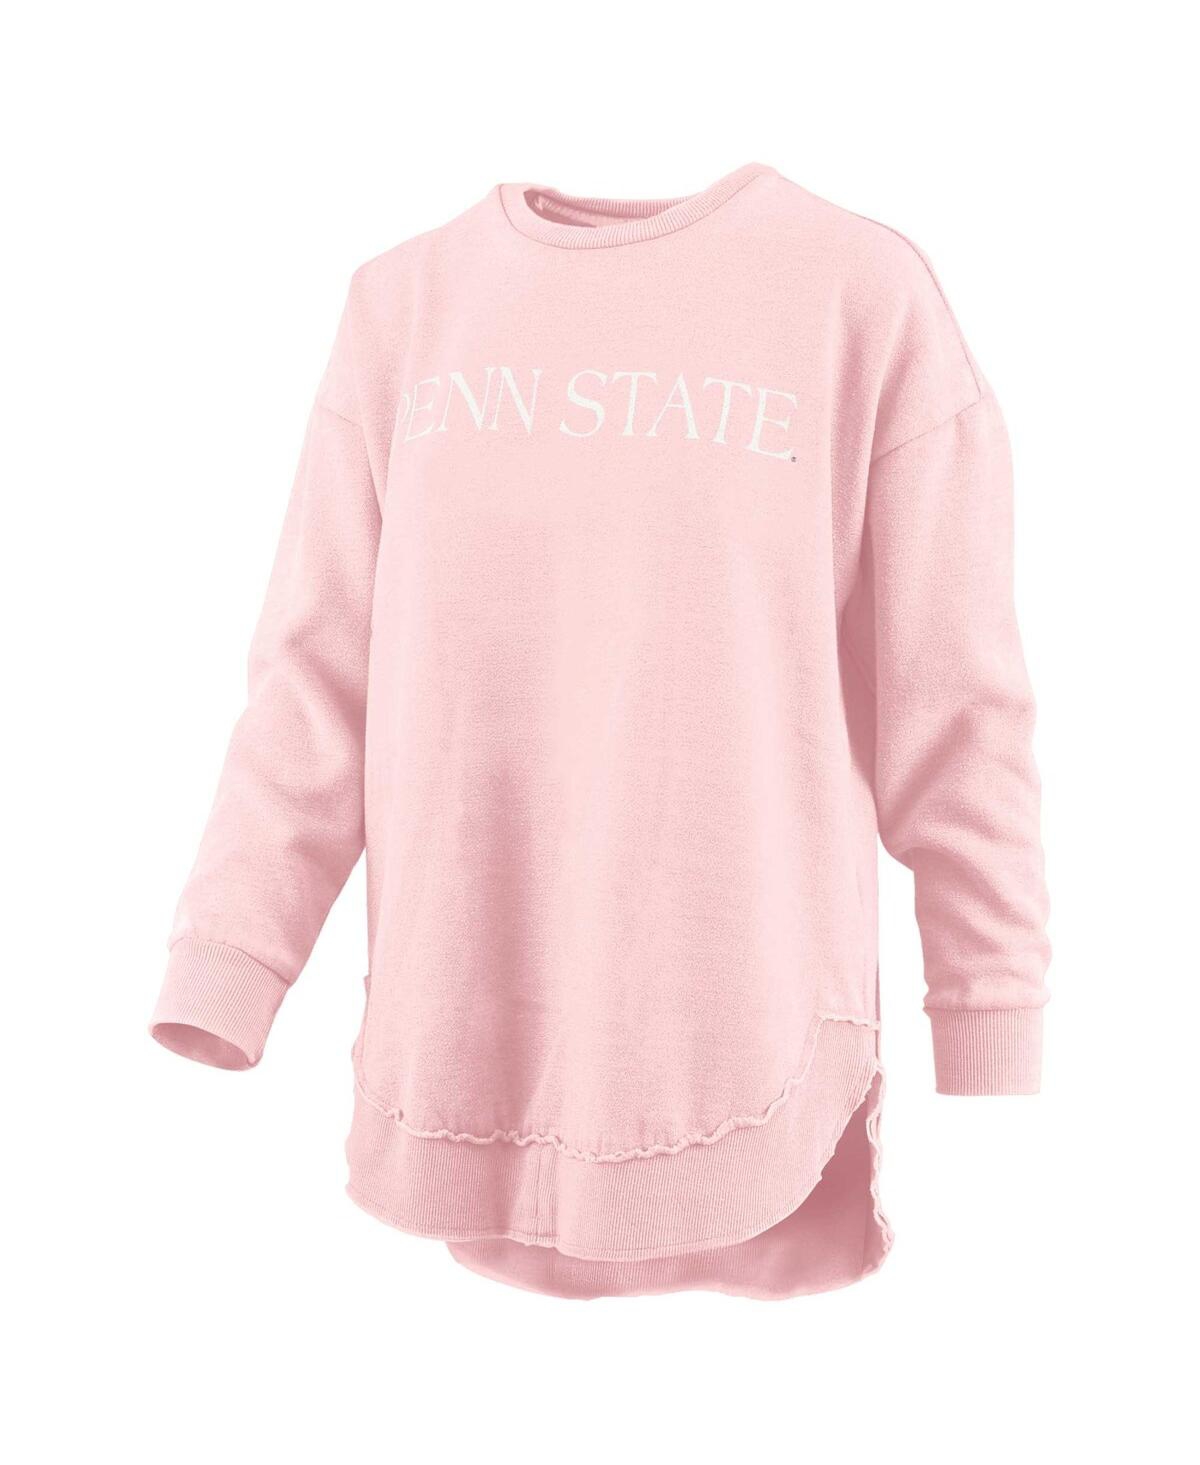 Shop Pressbox Women's  Pink Distressed Penn State Nittany Lions Seaside Springtime Vintage-like Poncho Pul